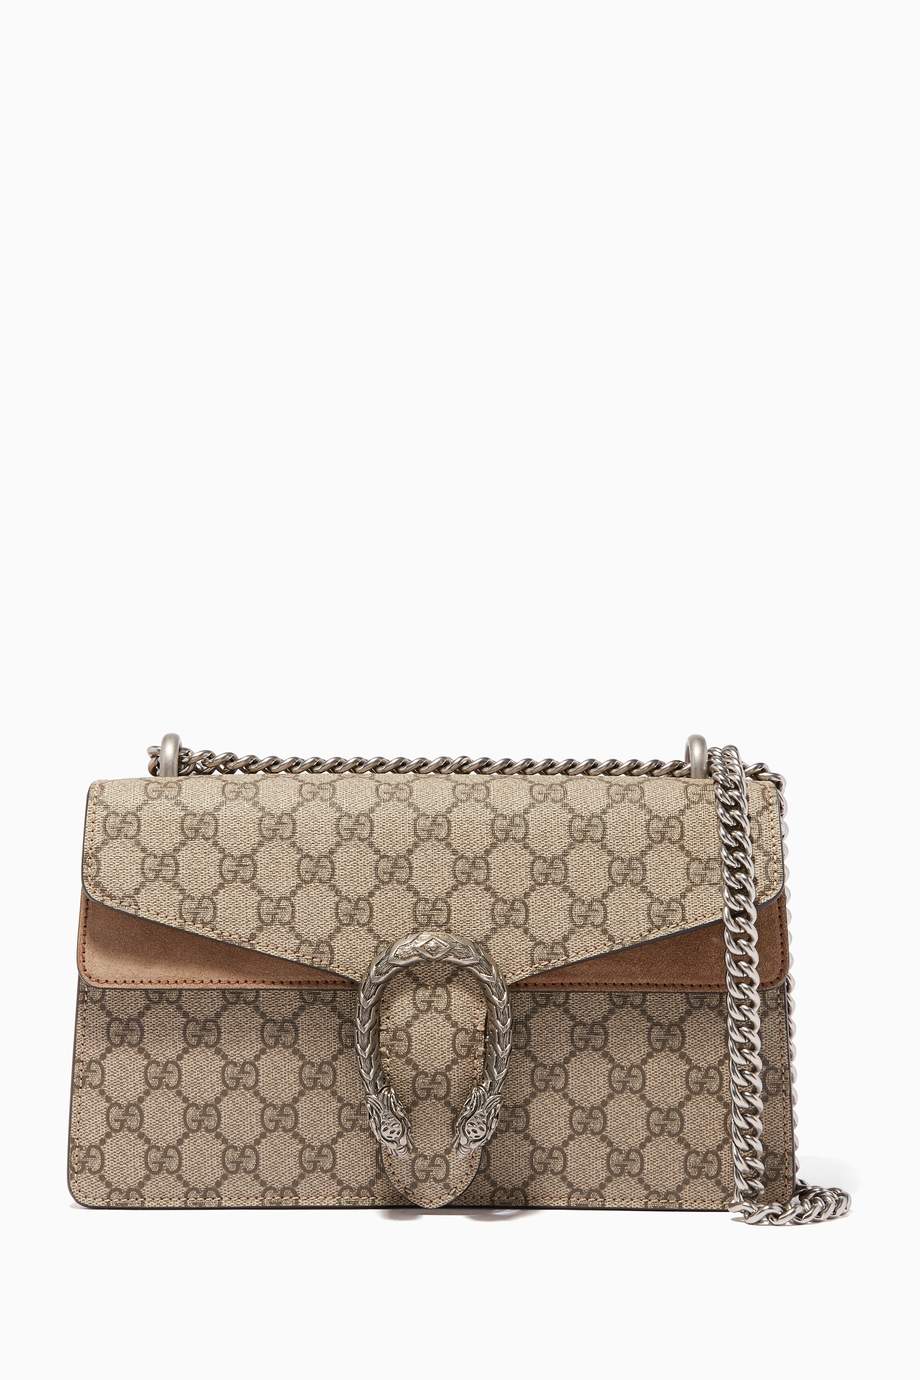 Shop Gucci Neutral Beige Small Dionysus GG Shoulder Bag for Women ...